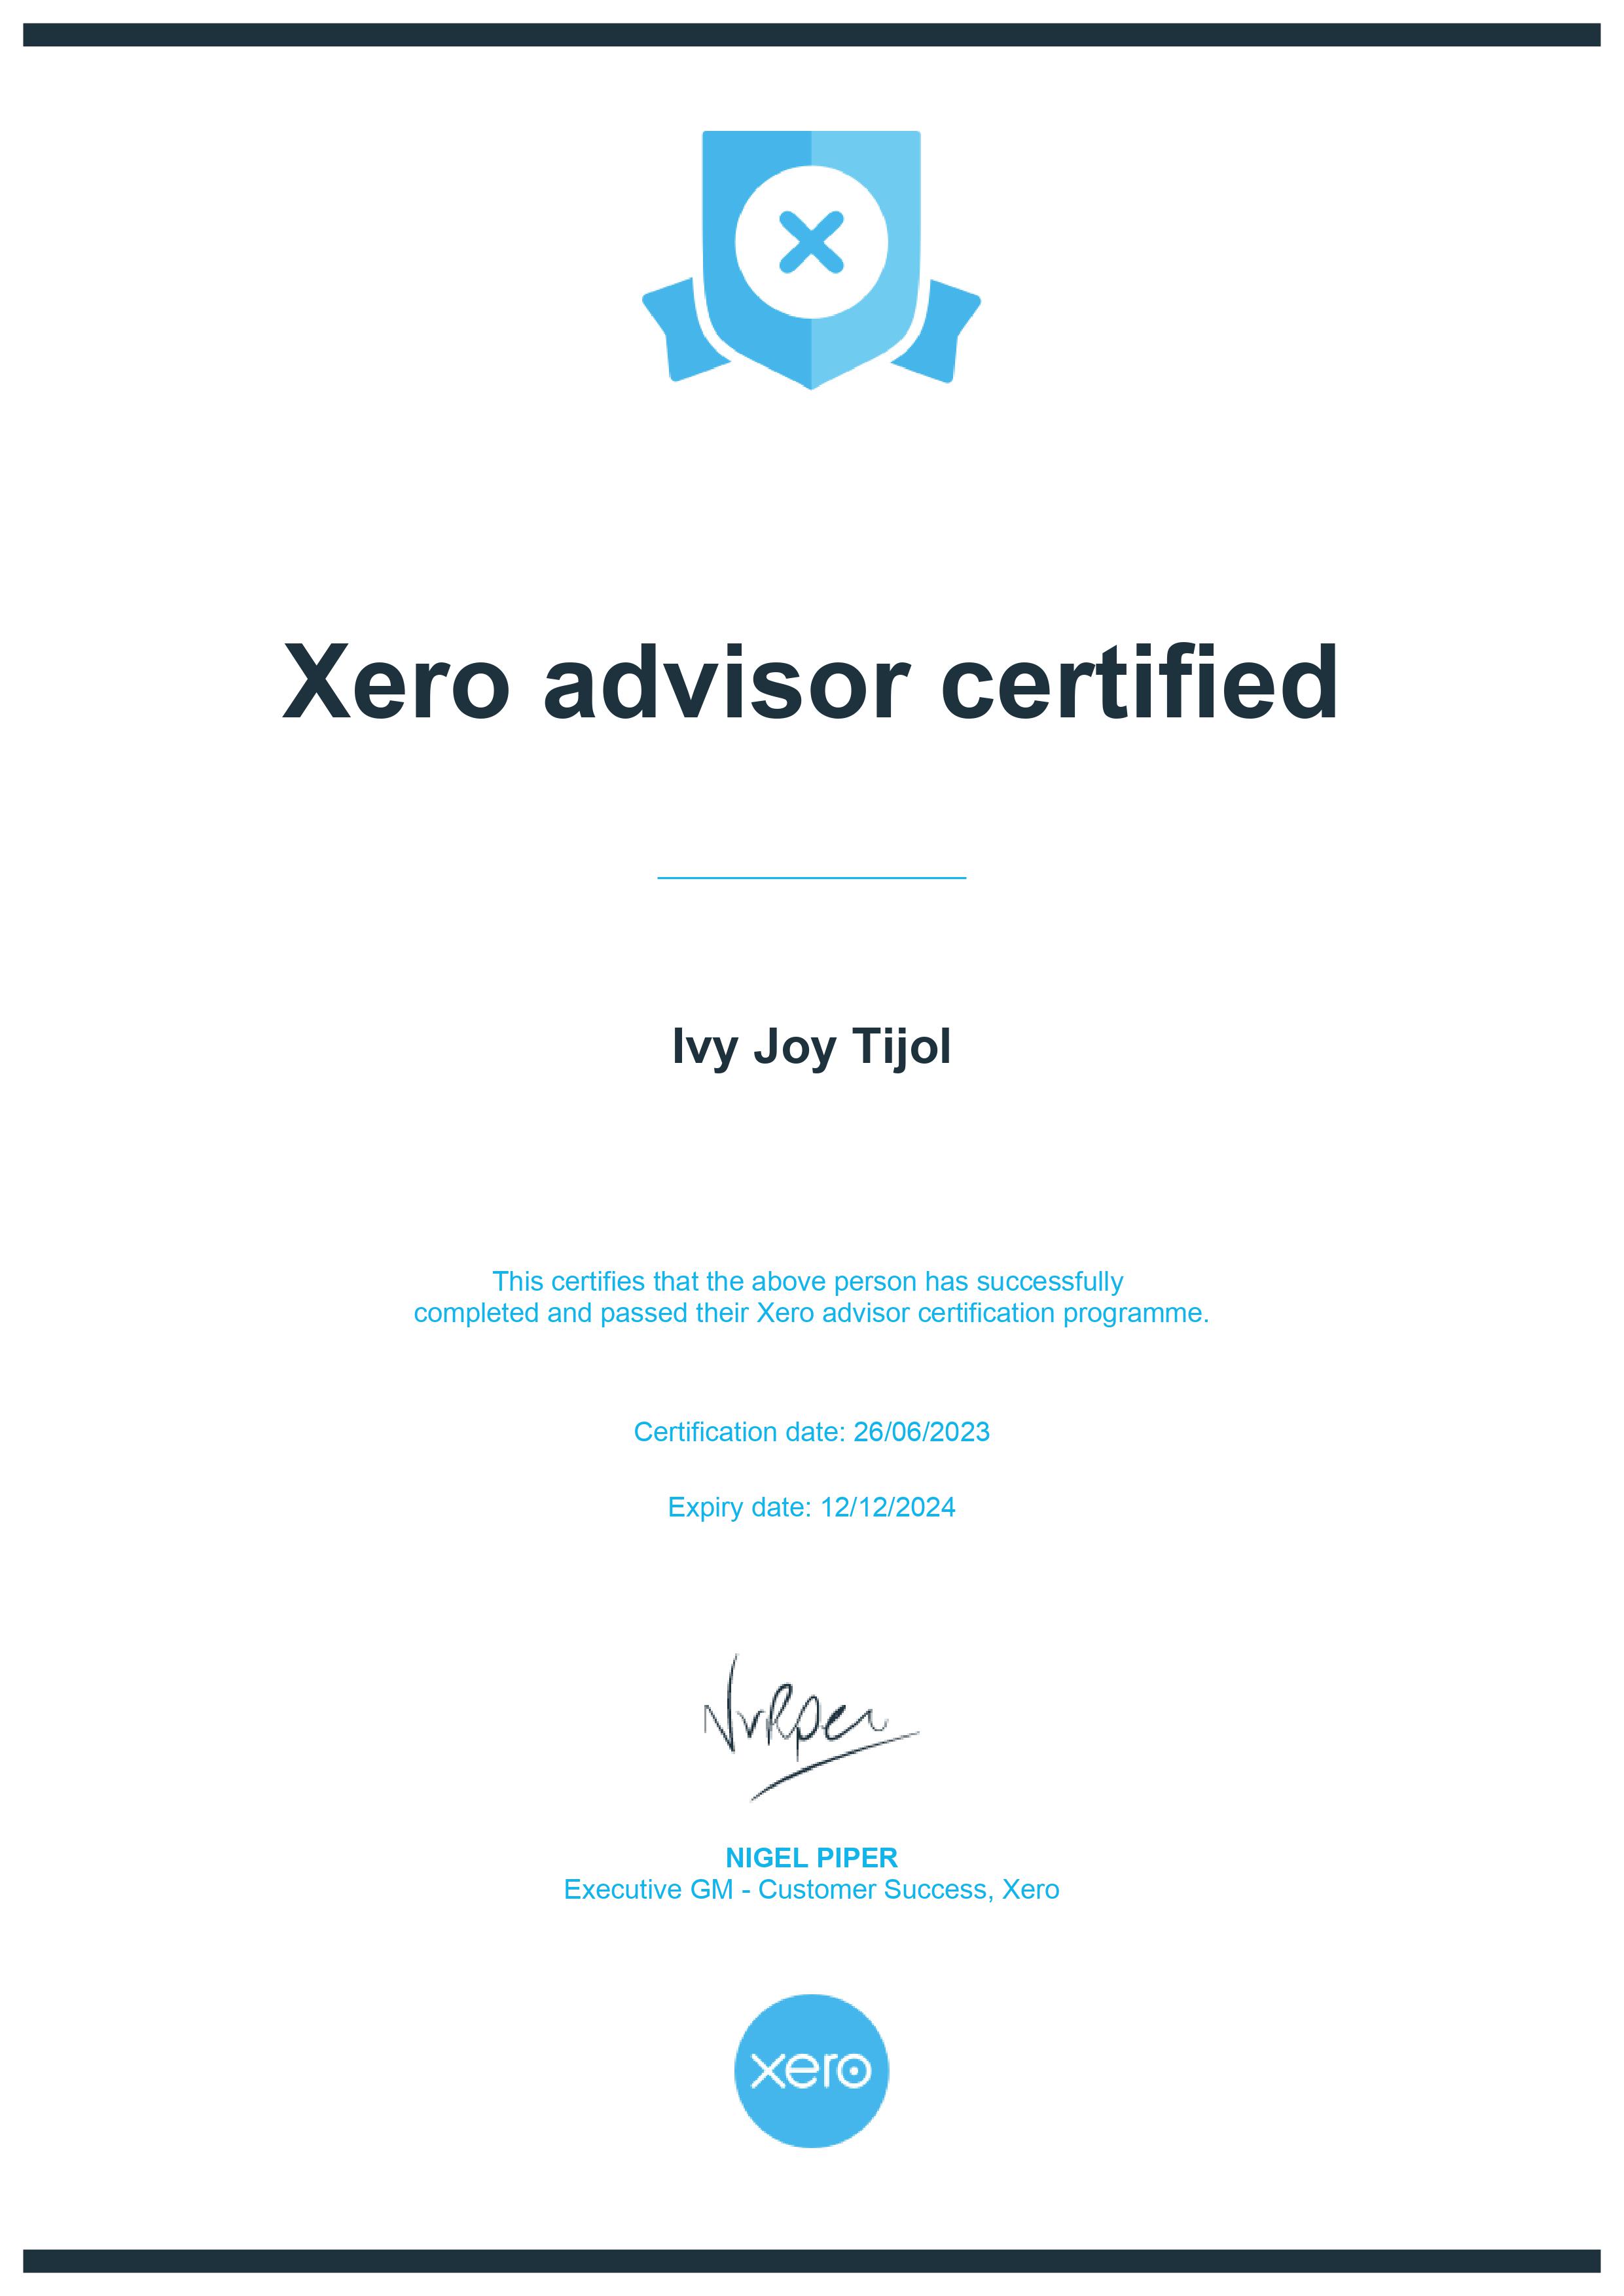 Xero Certificate